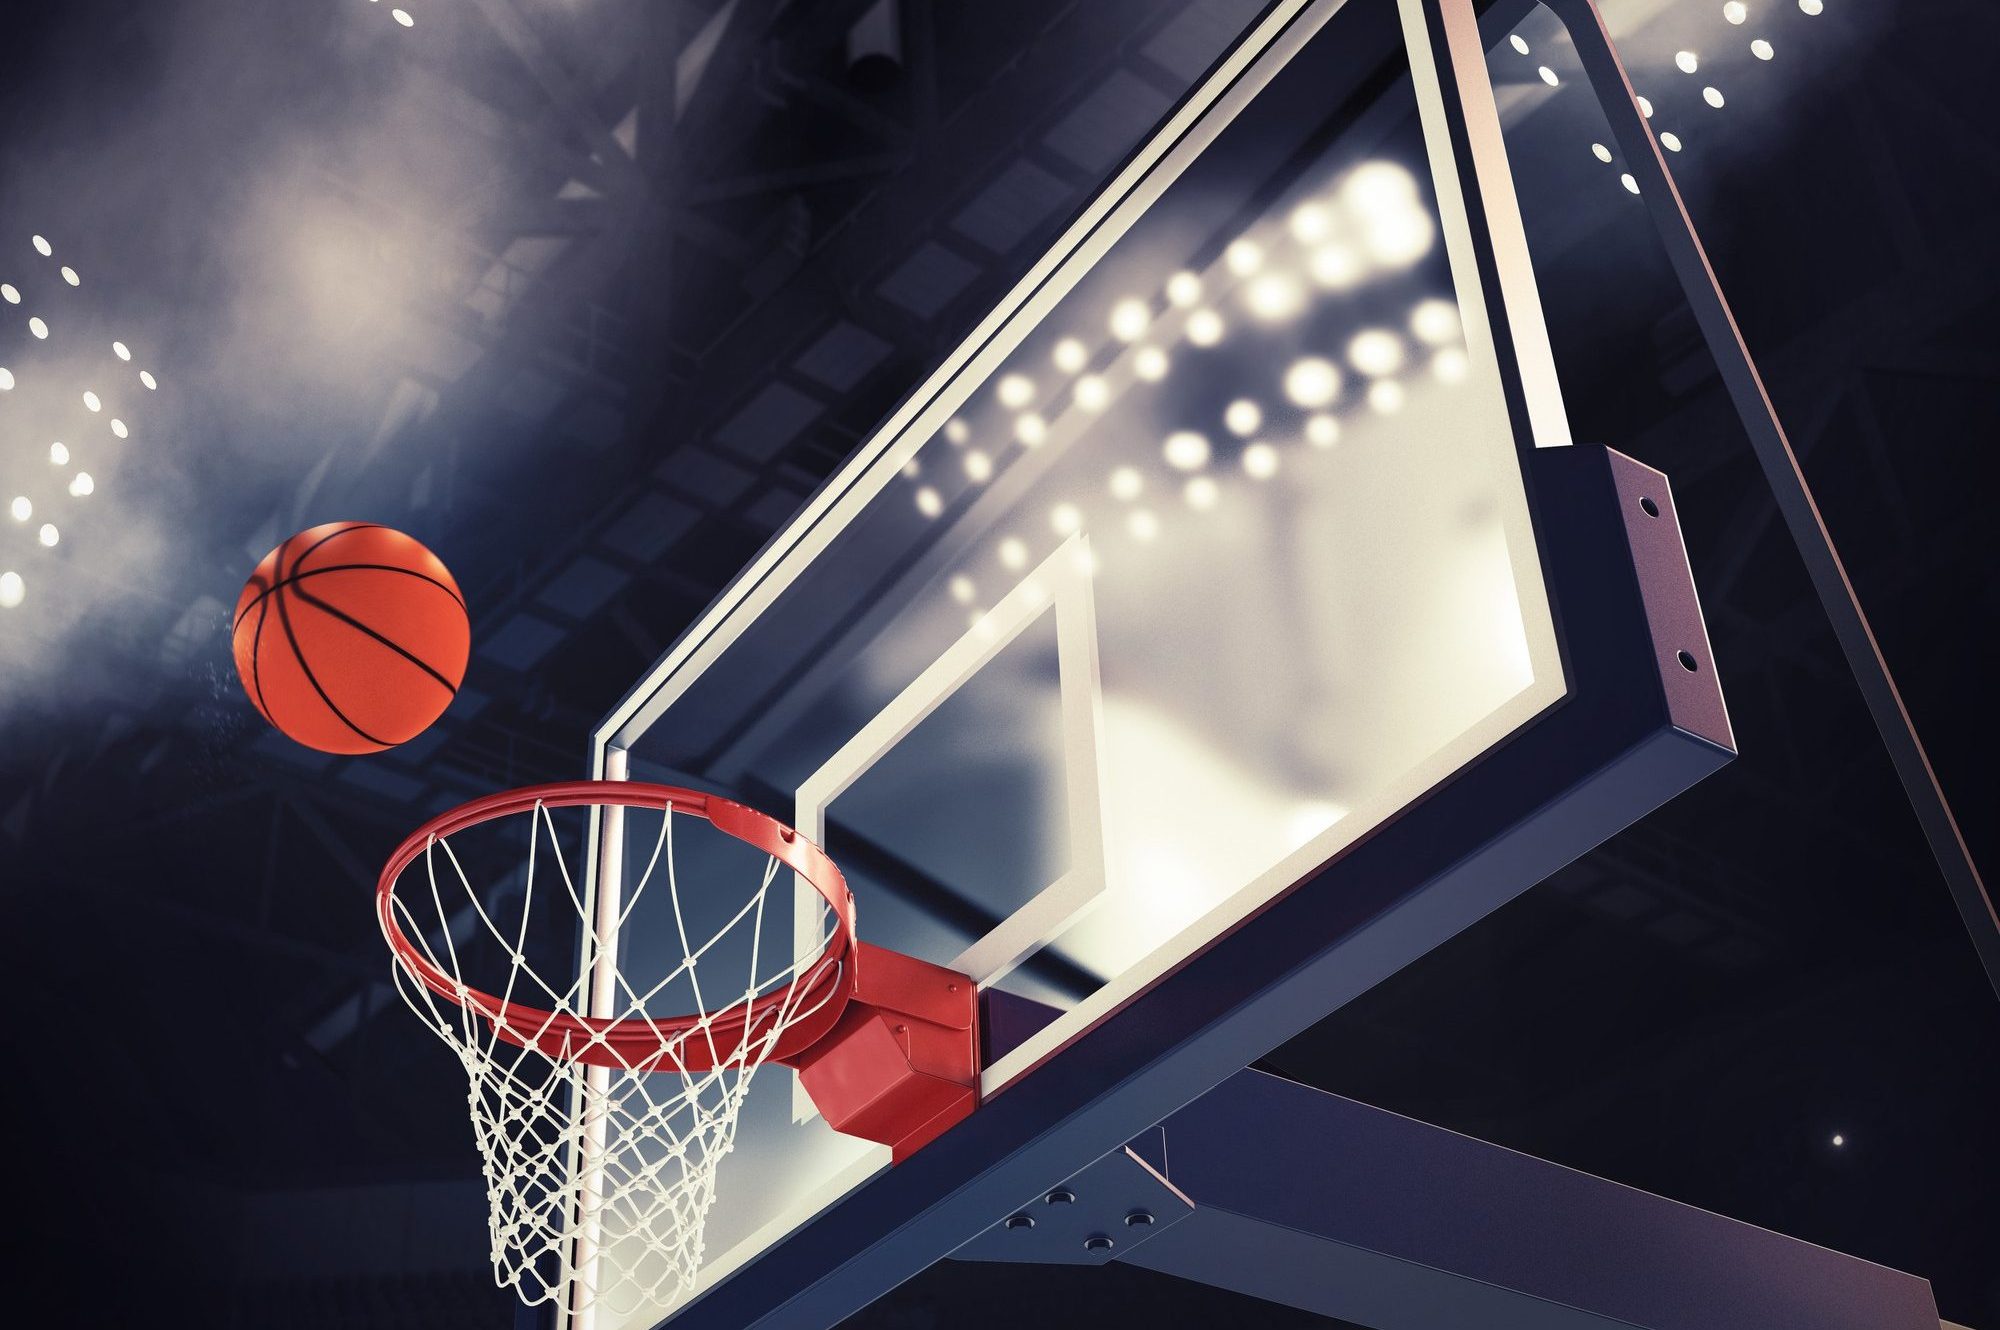 ball-basket-during-basketball-game